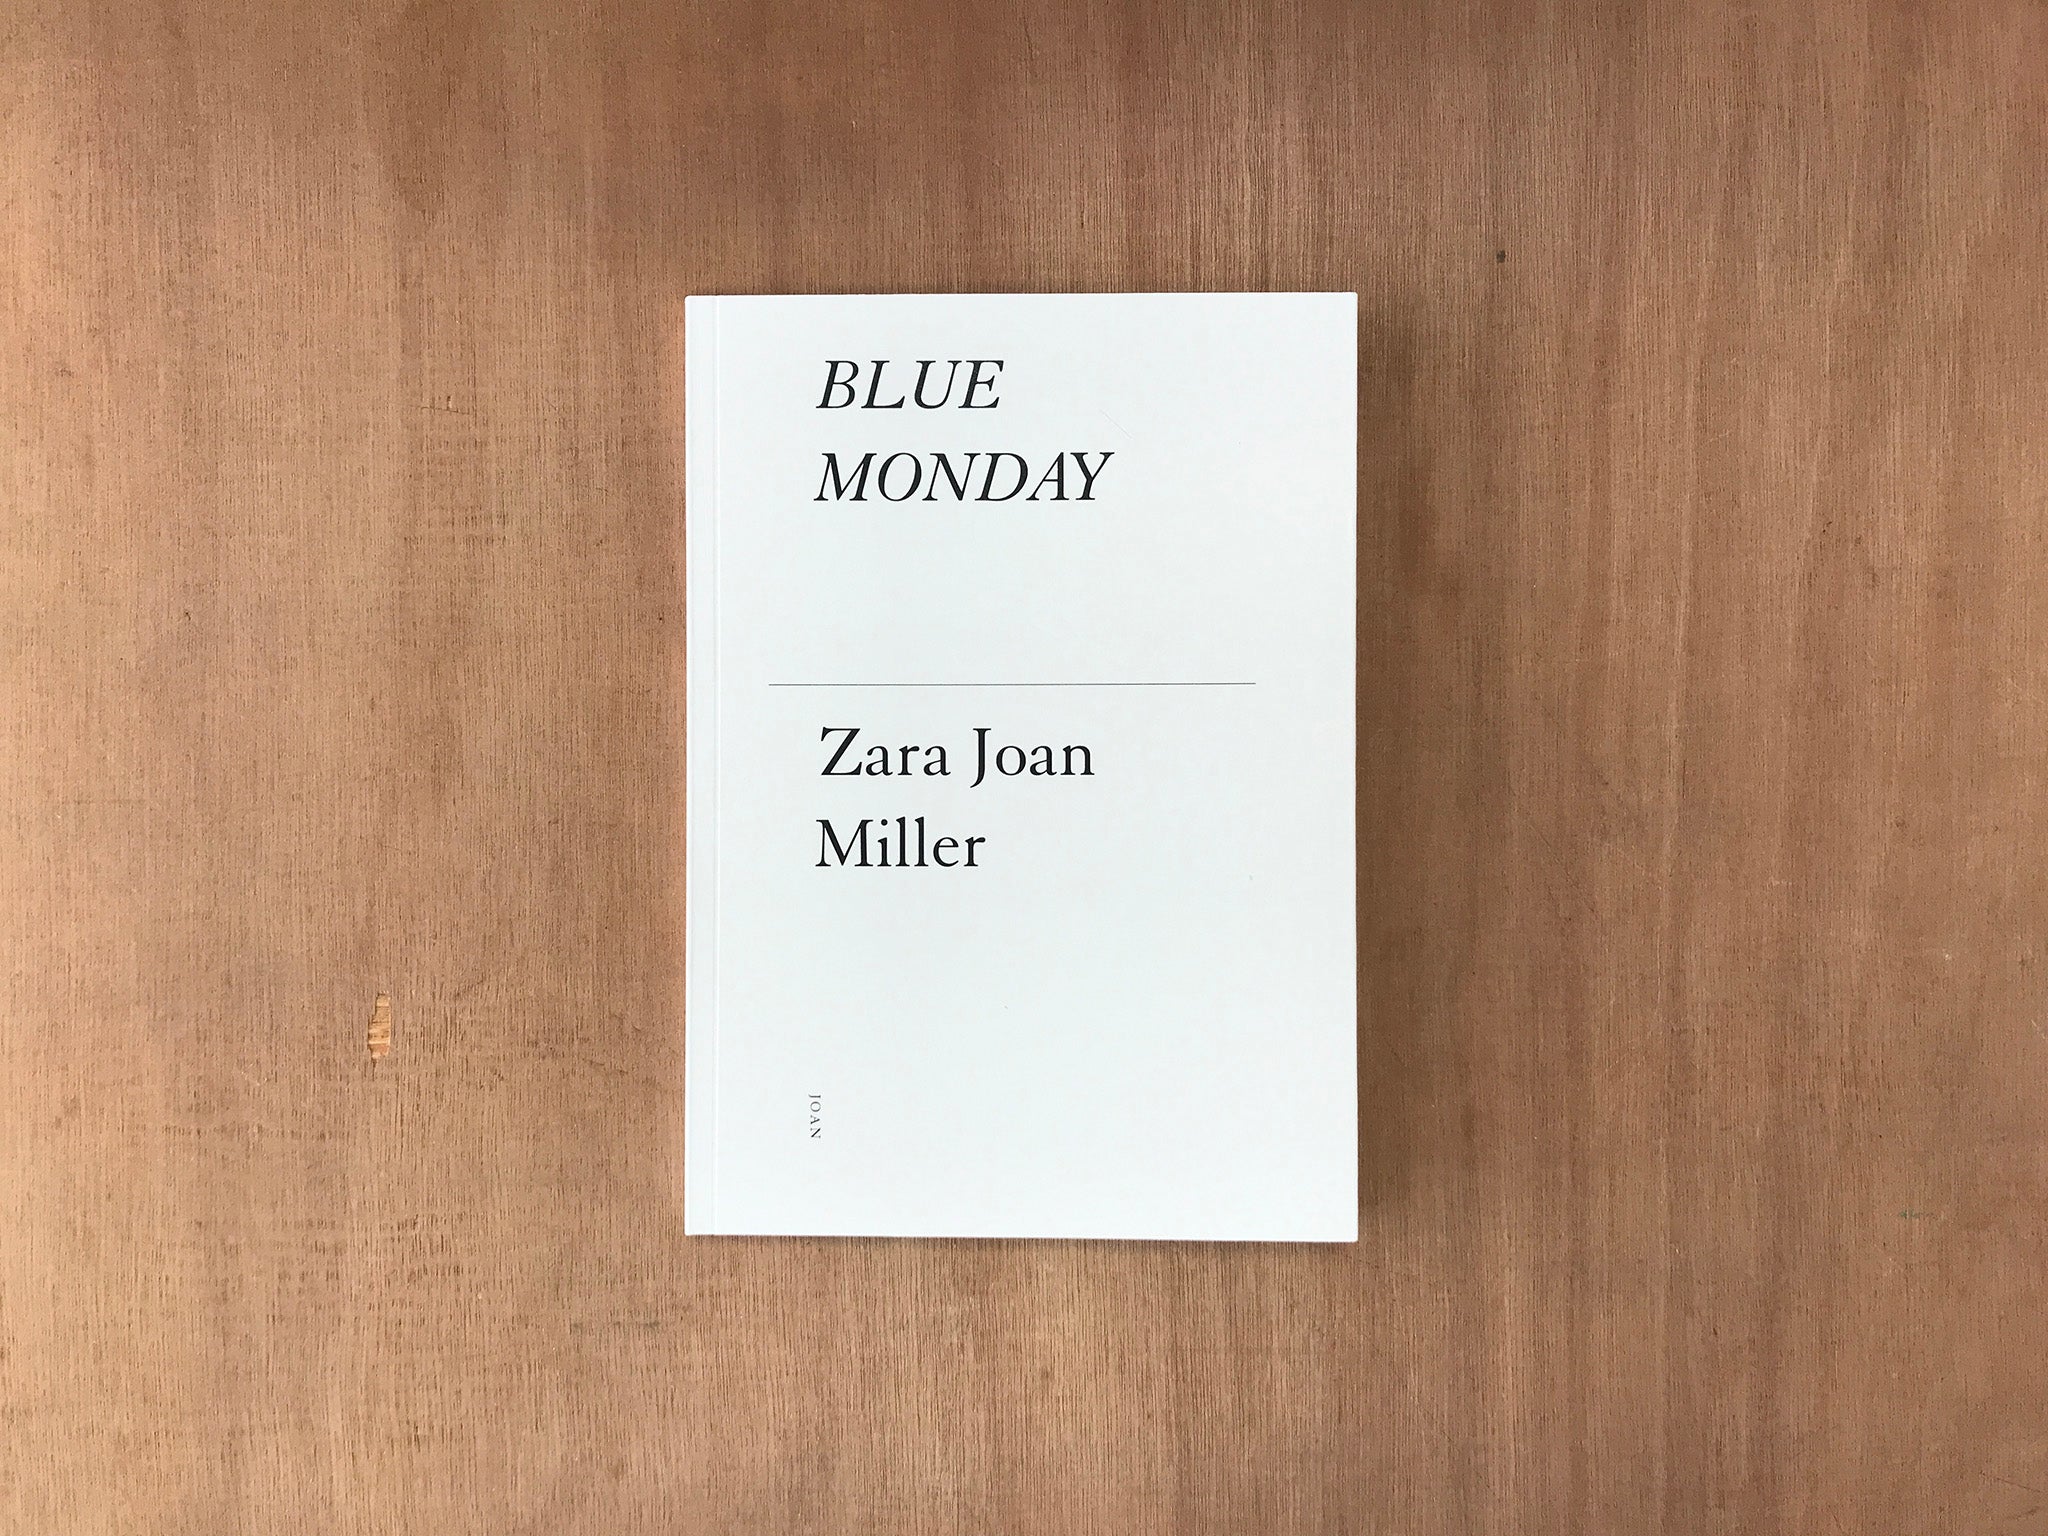 BLUE MONDAY by Zara Joan Miller